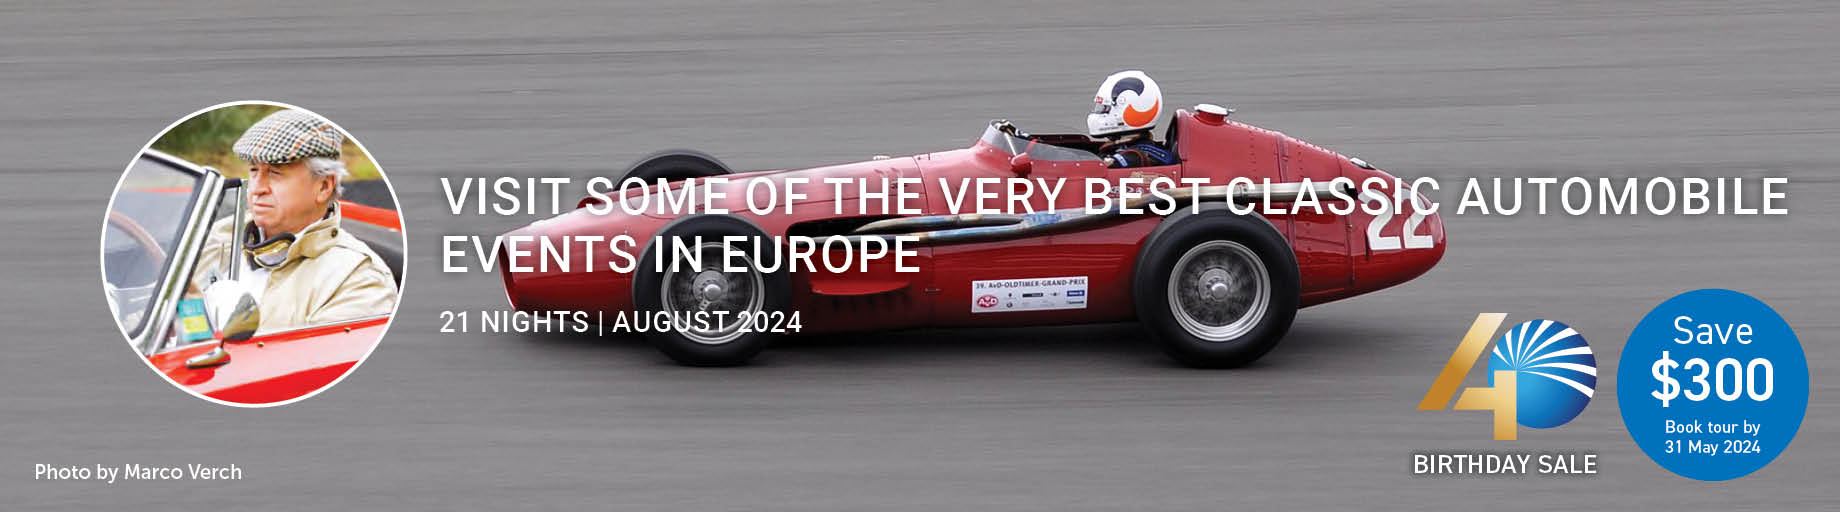 Classic Automobile Tour to Europe